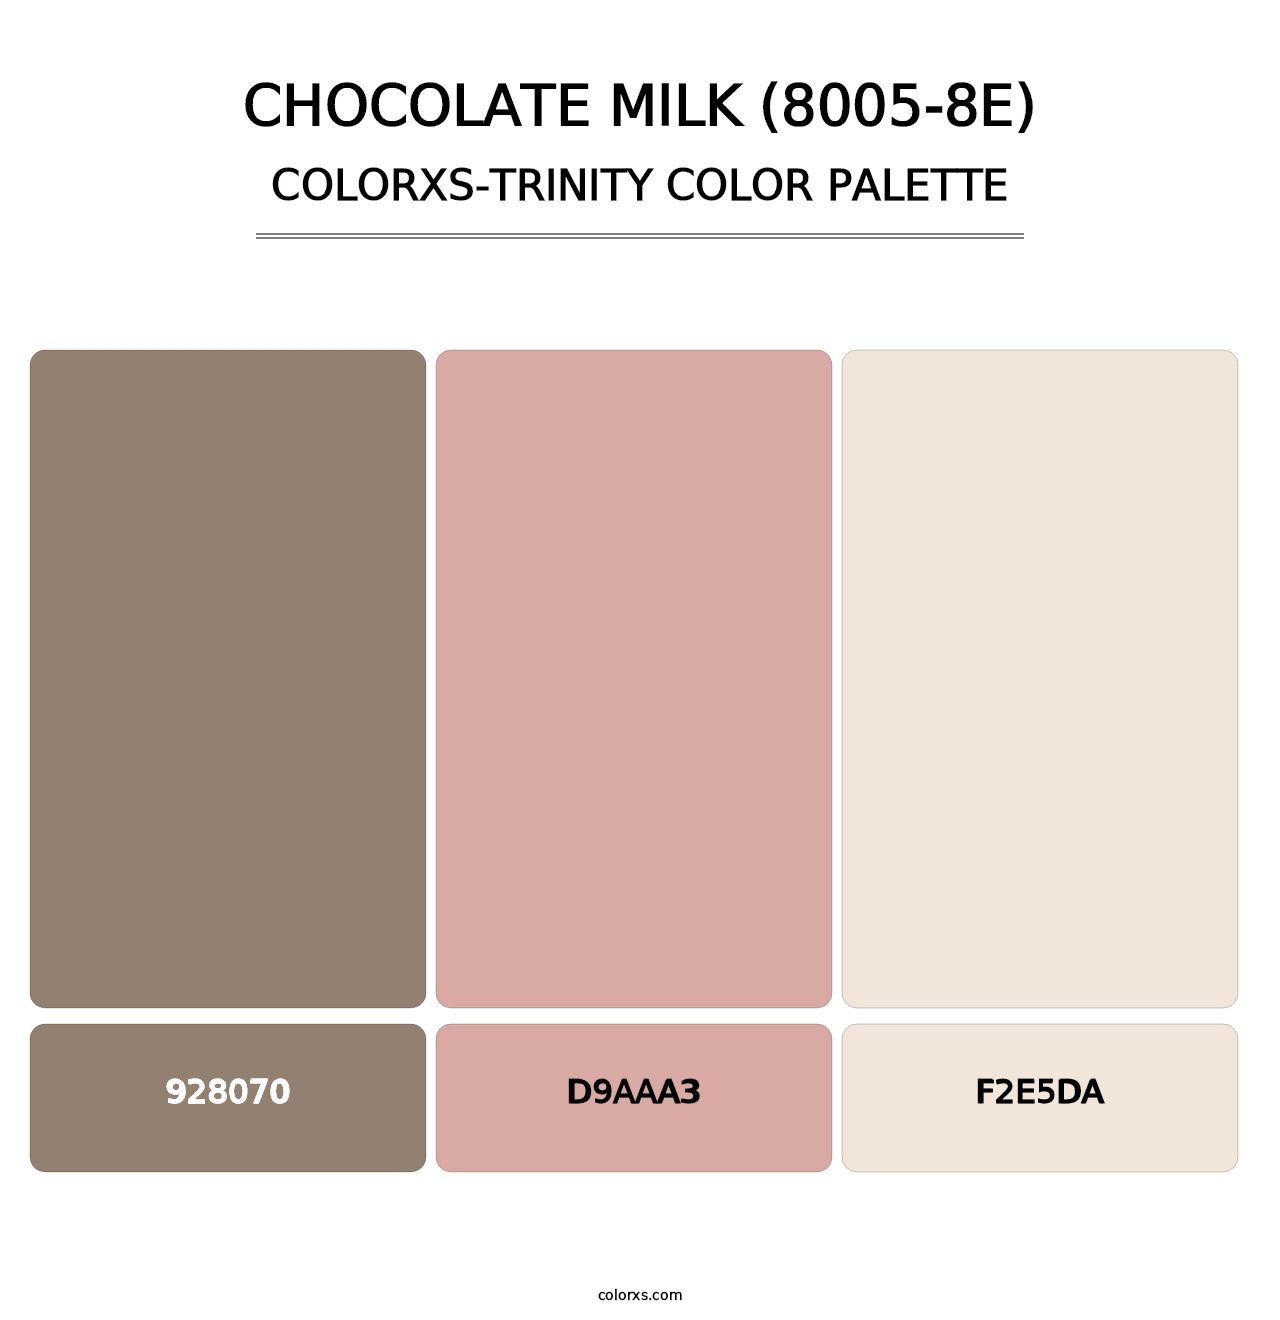 Chocolate Milk (8005-8E) - Colorxs Trinity Palette